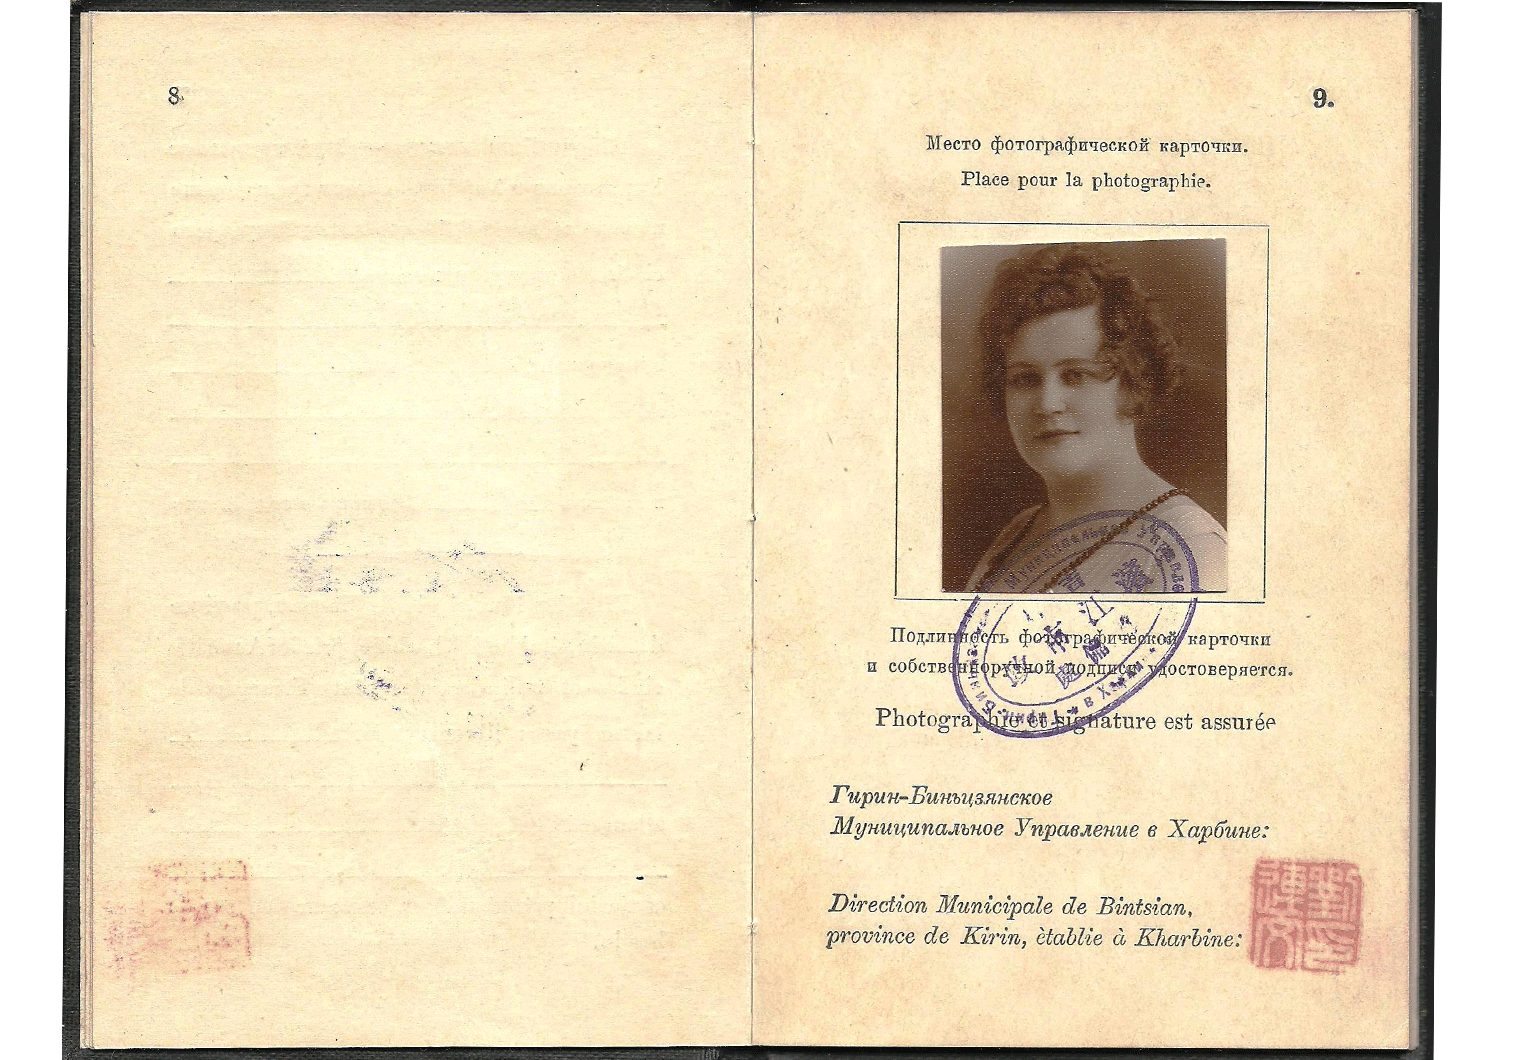 Manchuria passport